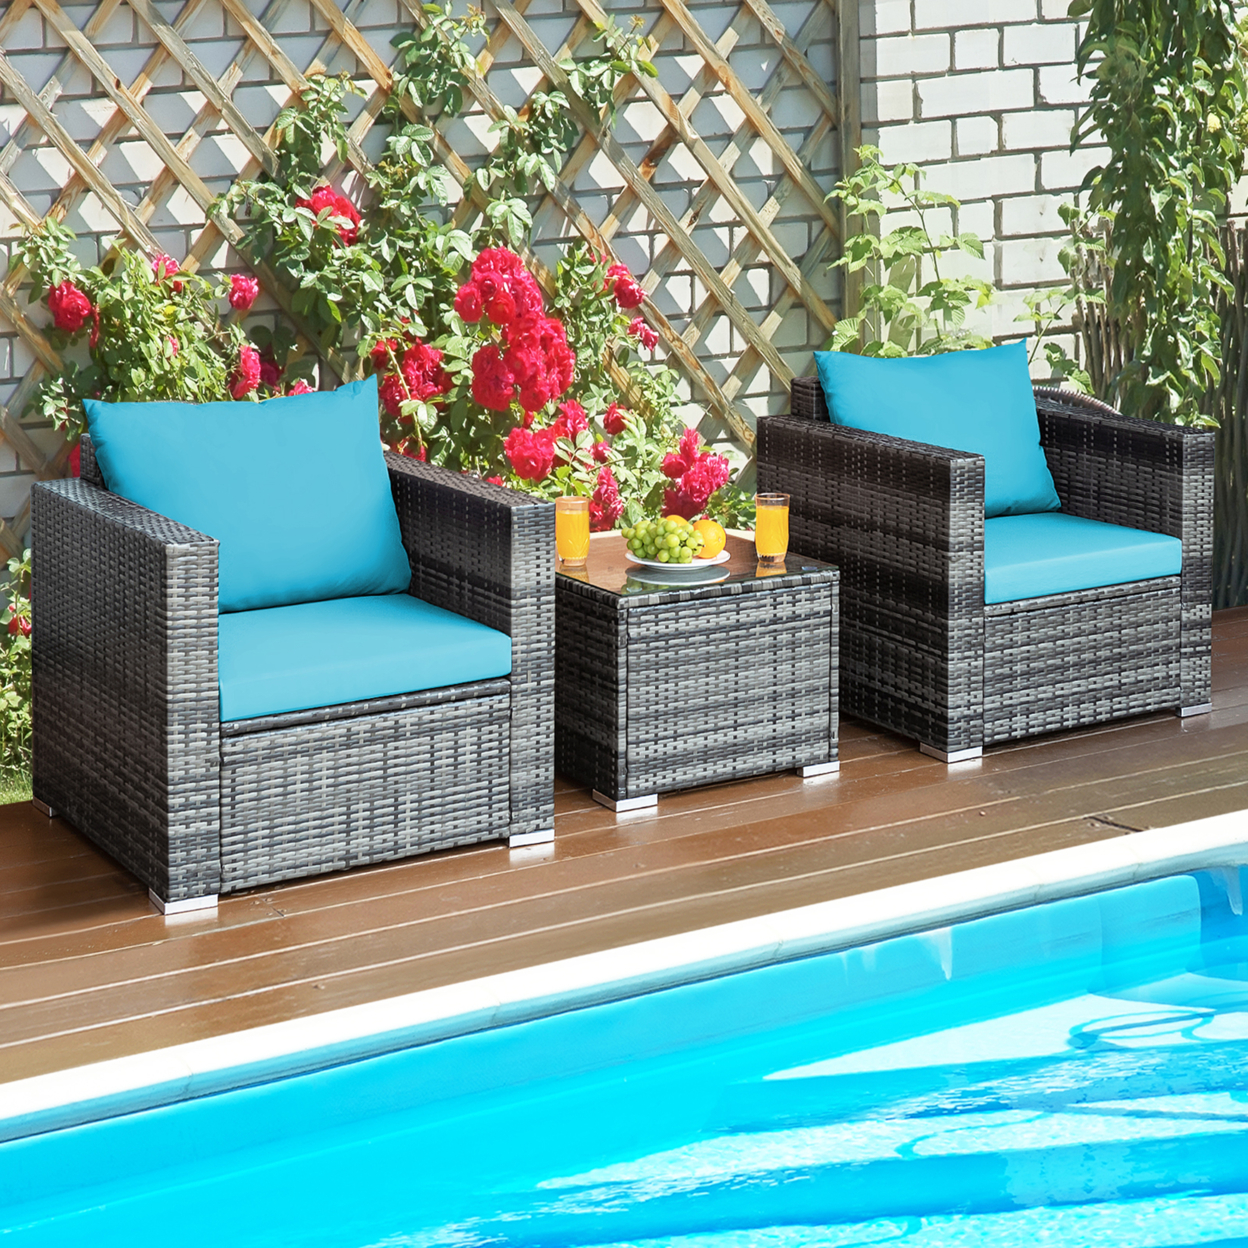 3PCS Rattan Patio Conversation Furniture Set Outdoor Yard W/ Turquoise Cushion